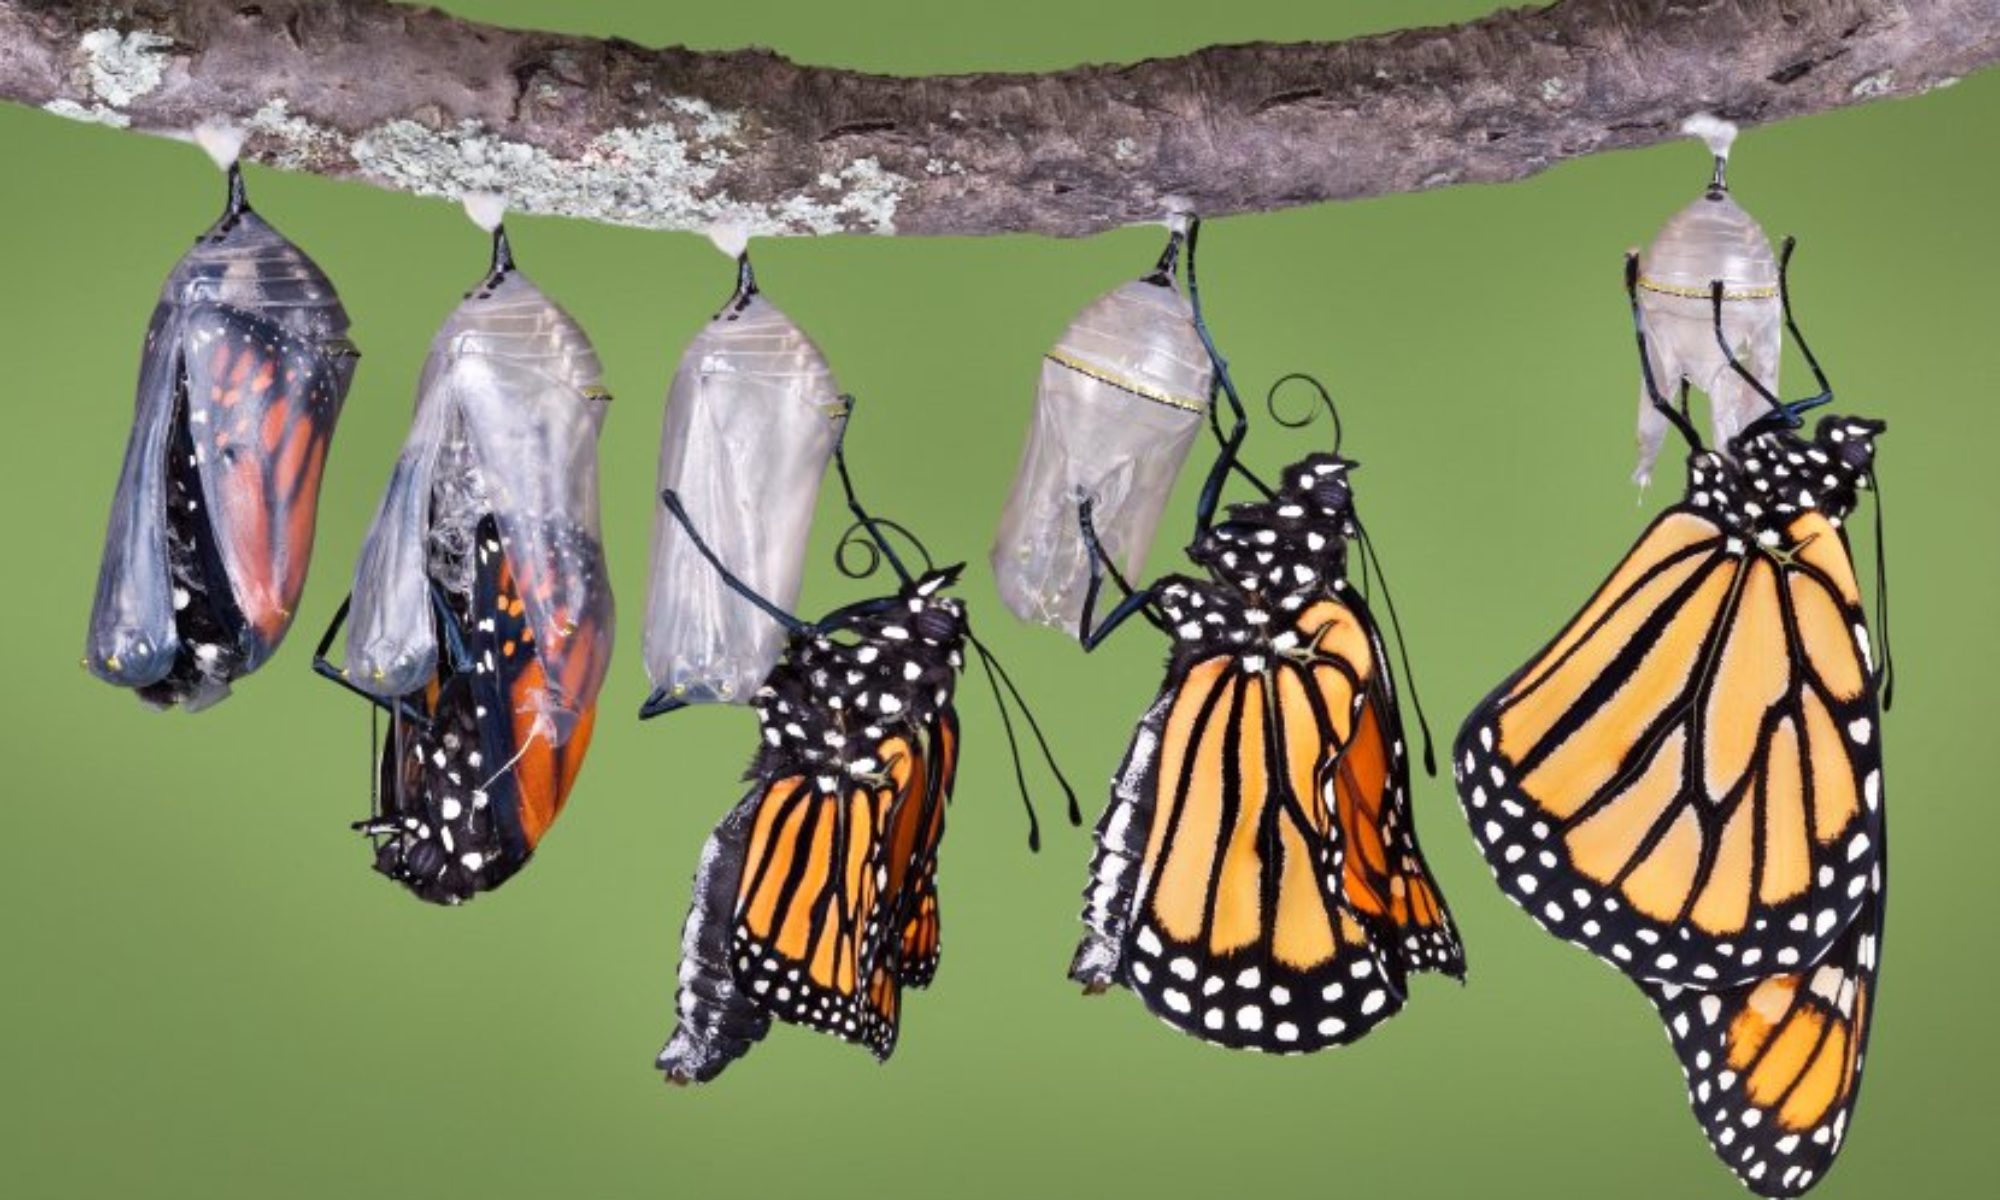 "Статьи" - cropped Monarchs